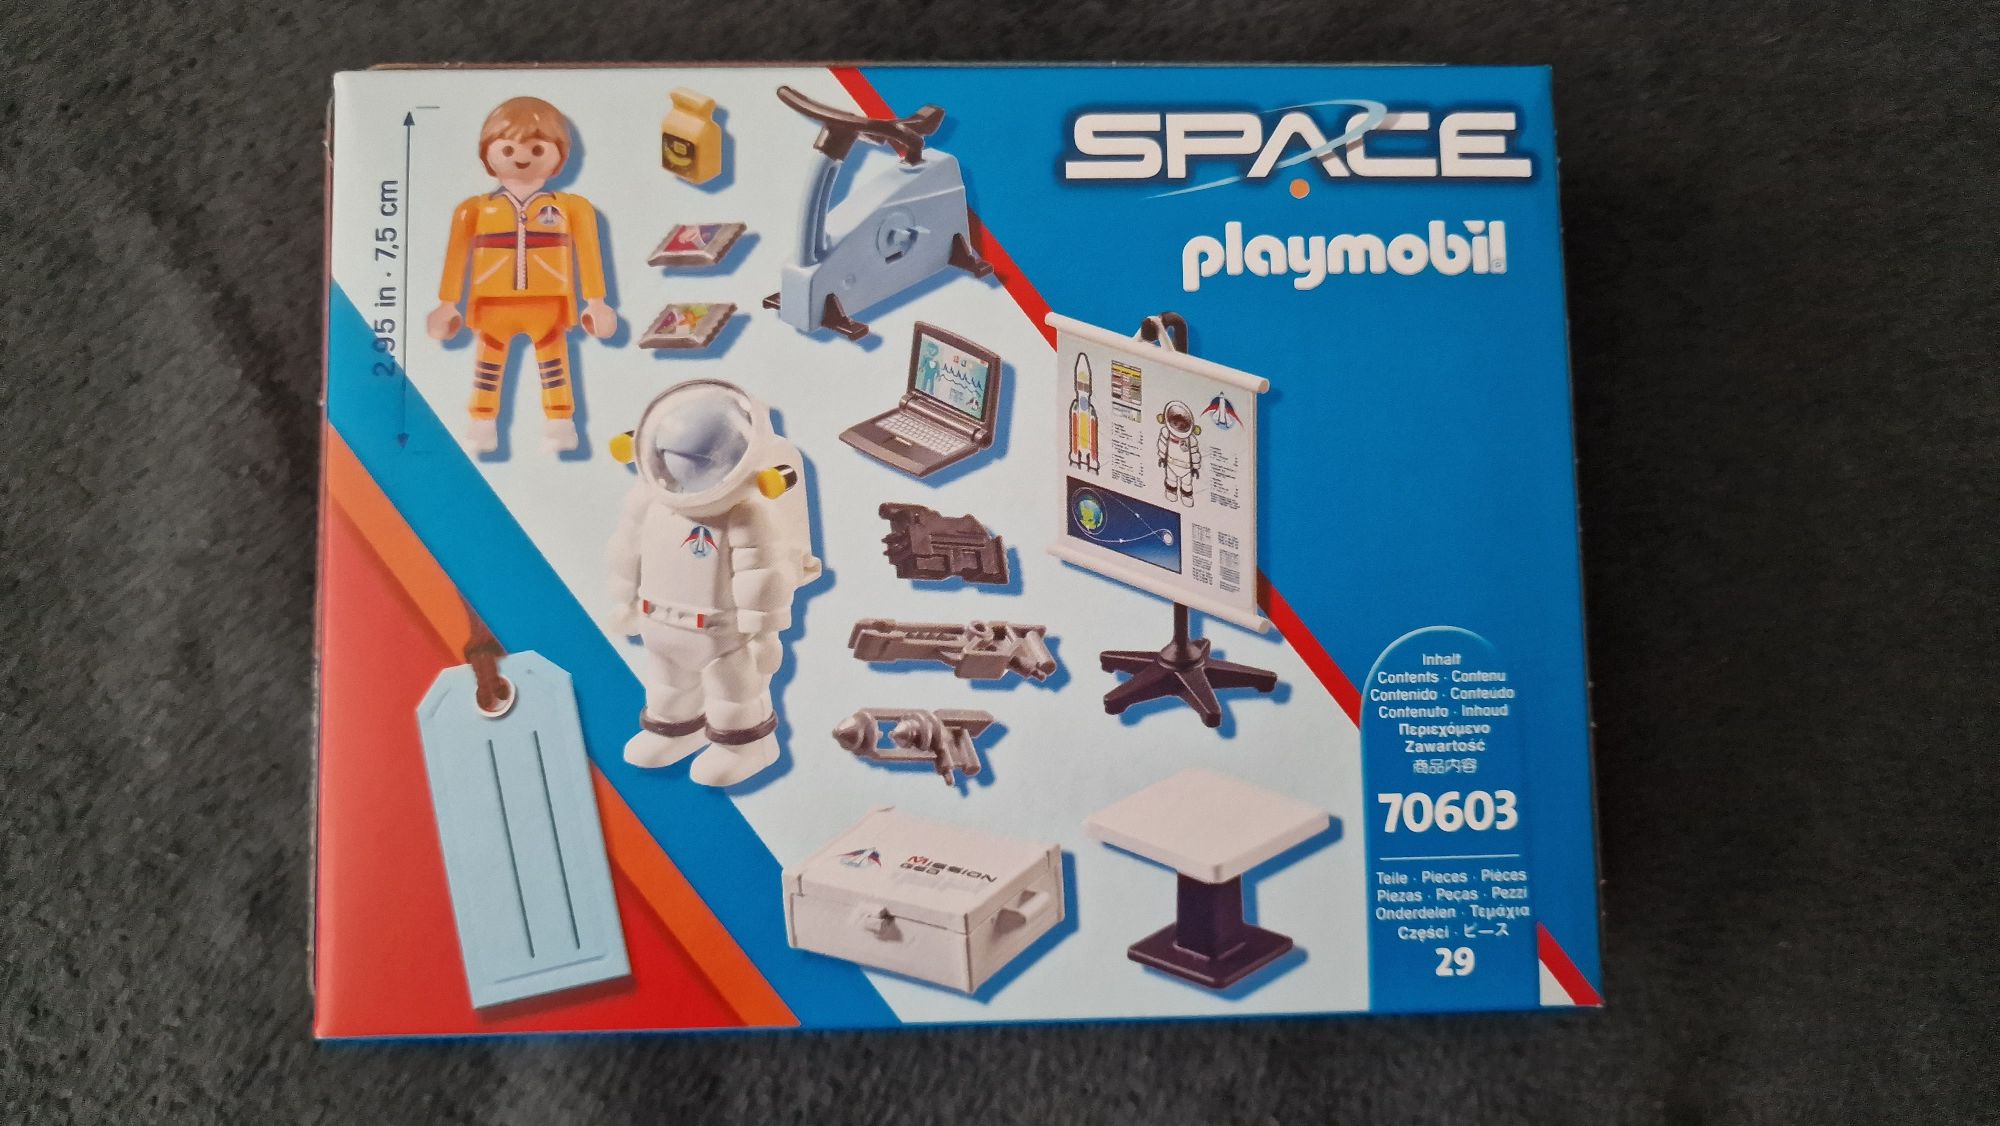 Playmobil 70603 Trening Astronauty